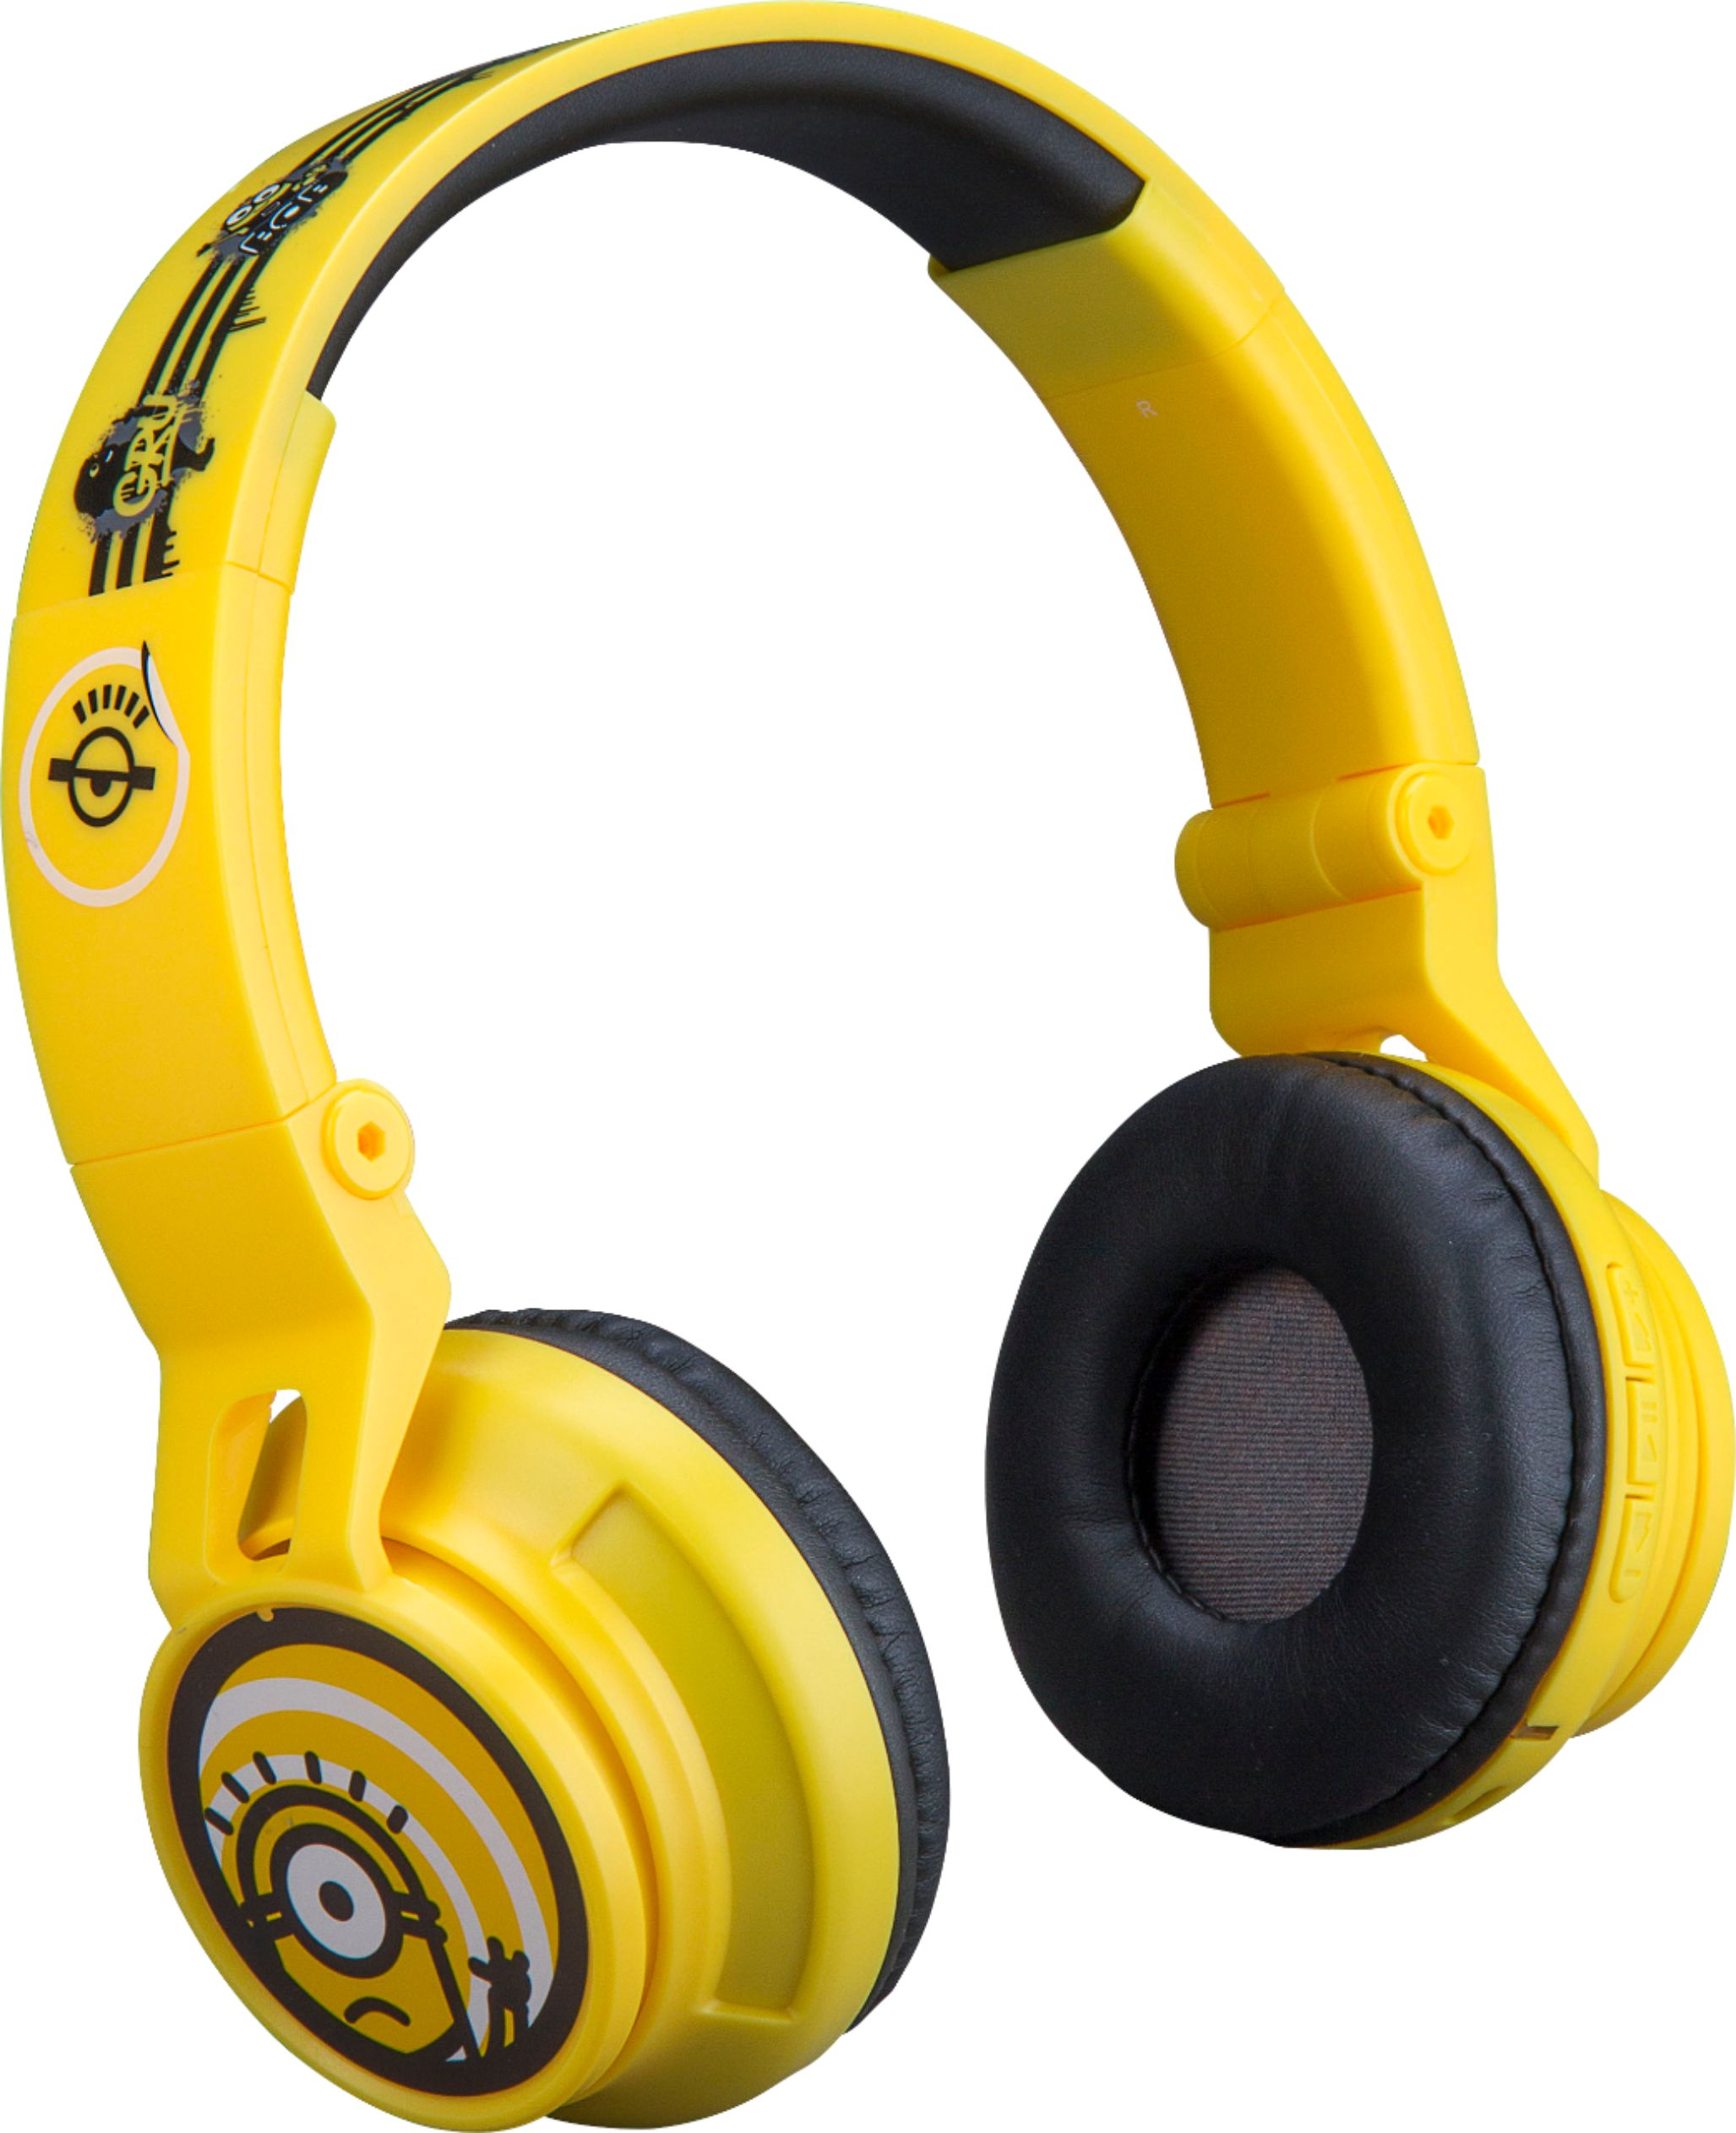 Angle View: eKids - Minions 2 Wireless Over-the-Ear Headphones - Yellow/Black